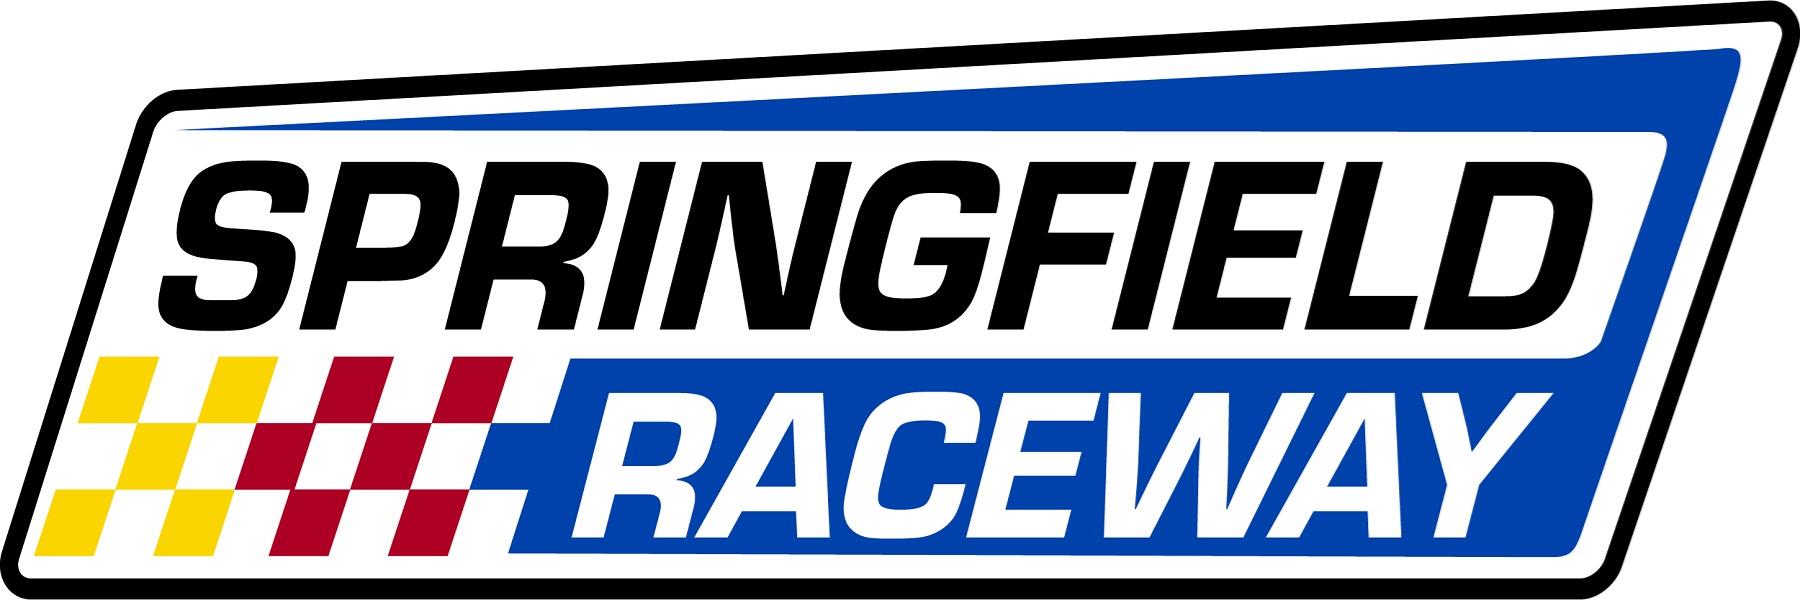 6/12/2021 - Springfield Raceway